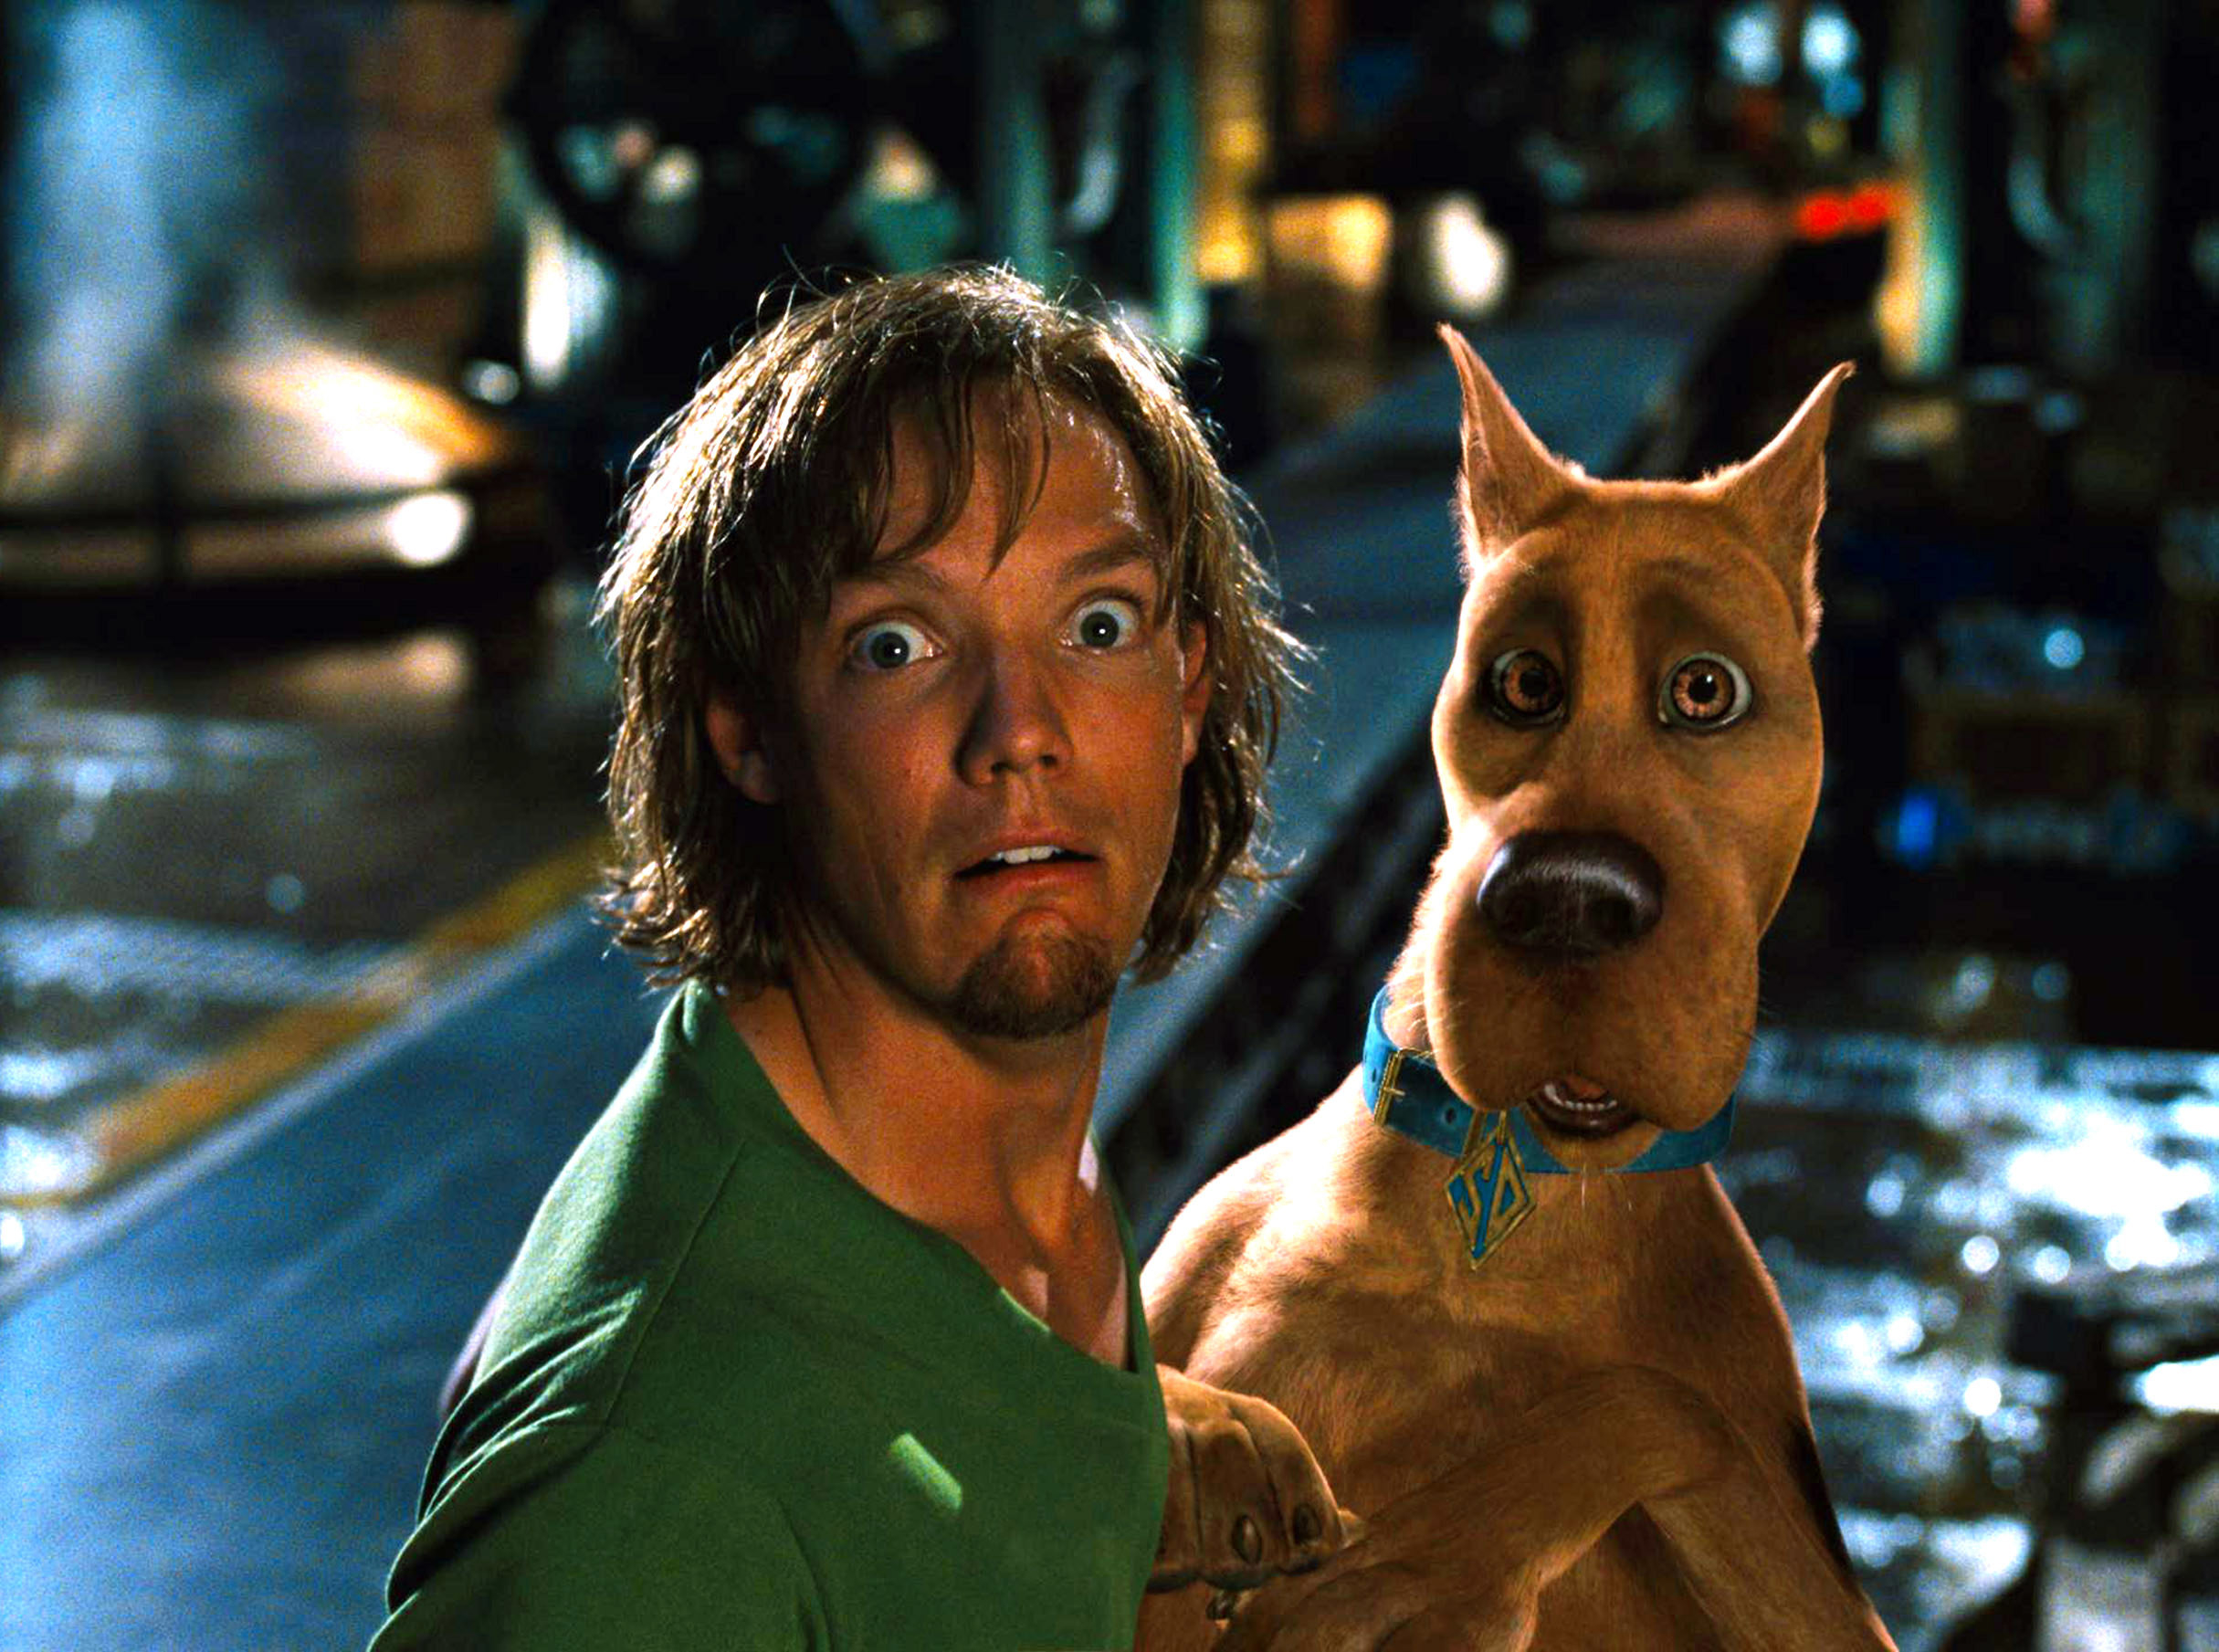 Matthew Lillard stands next to an animated dog